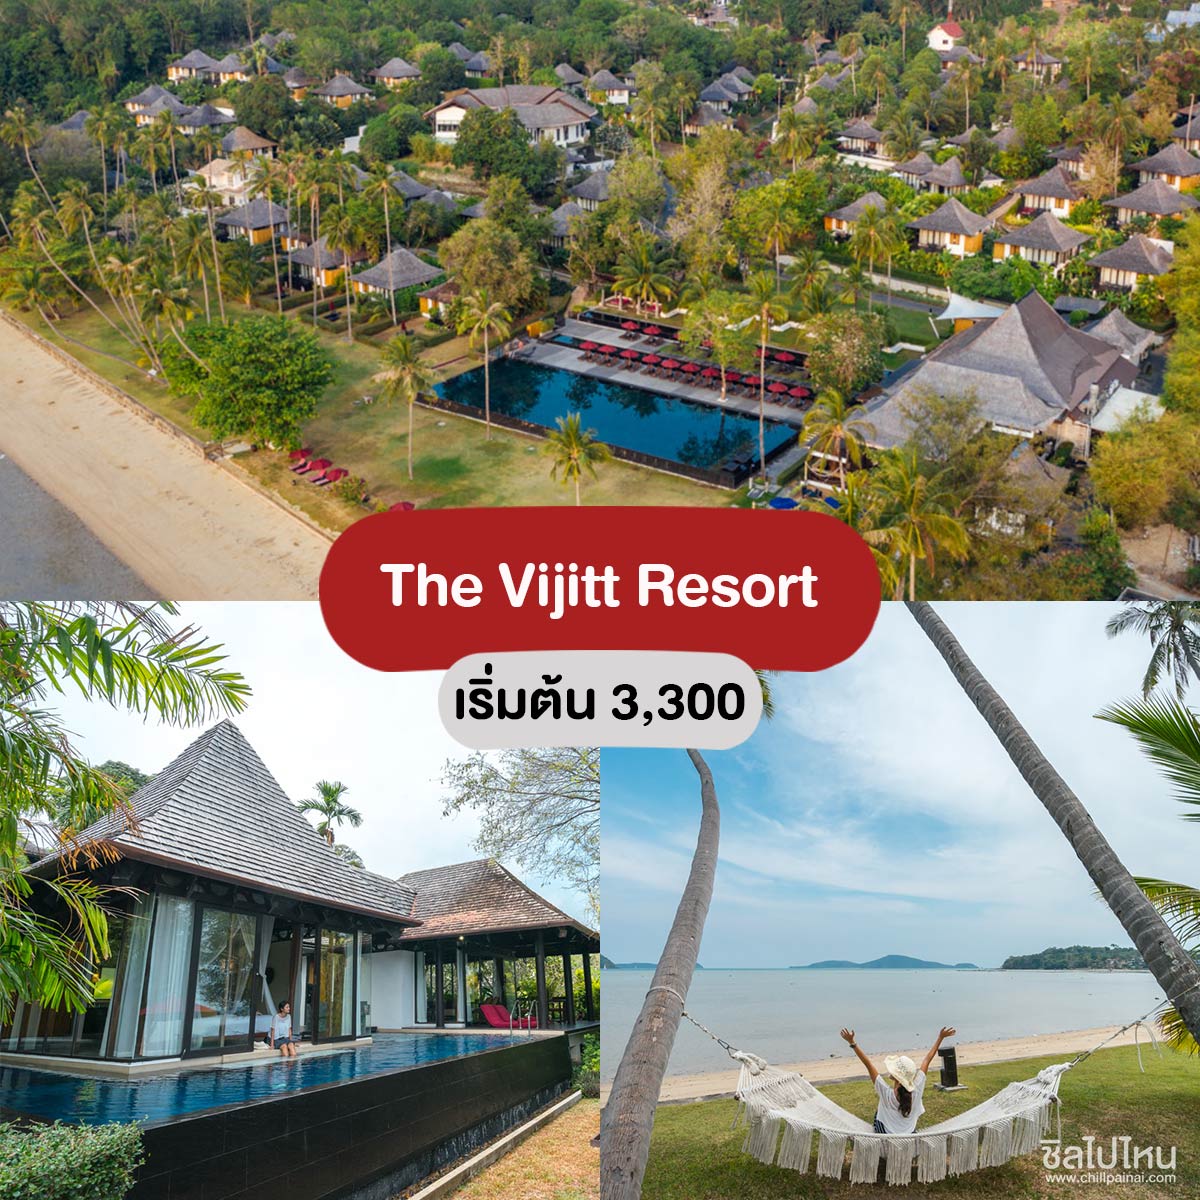 The Vijitt Resort - ที่พักภูเก็ตวิวทะเล